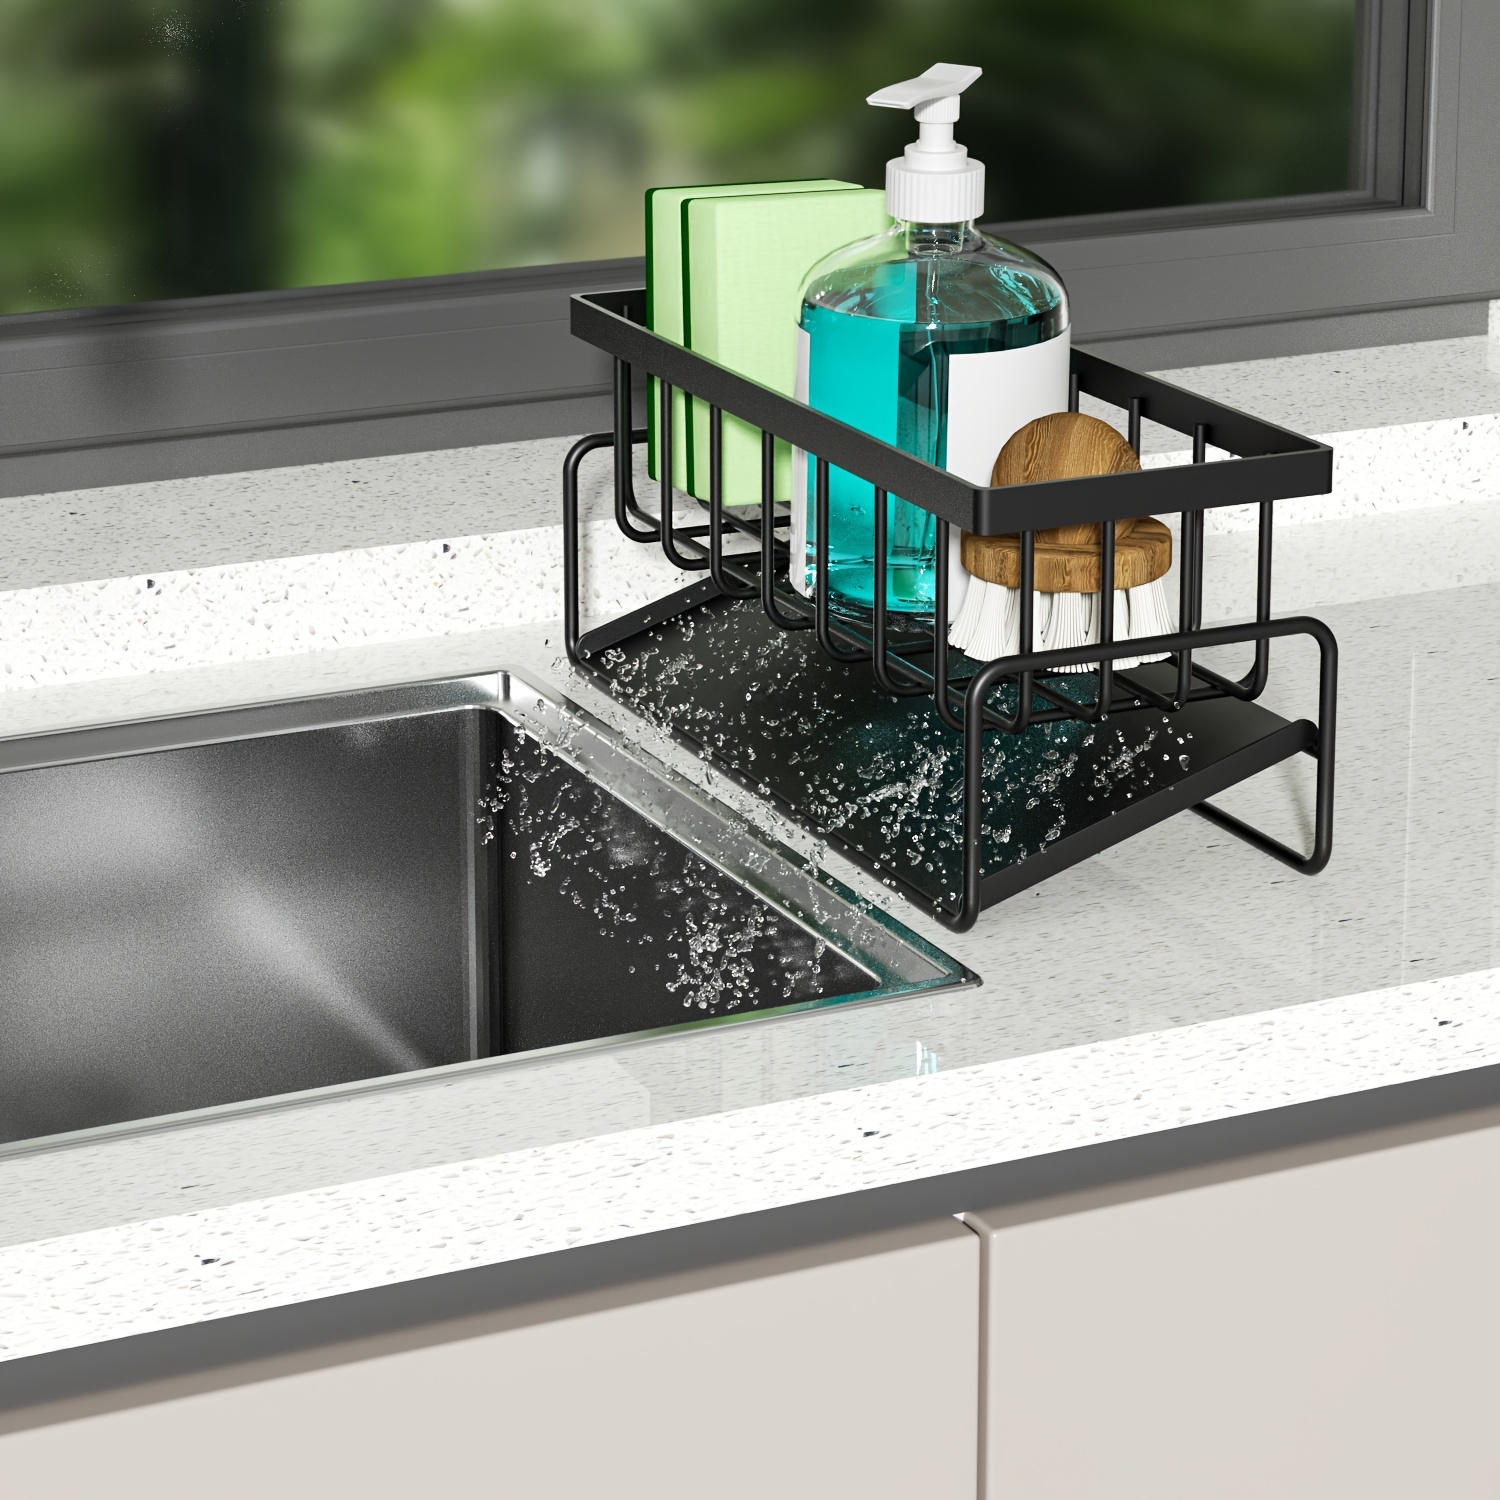 1pc Soap Dispenser For Kitchen Sink, Stainless Steel Organizer